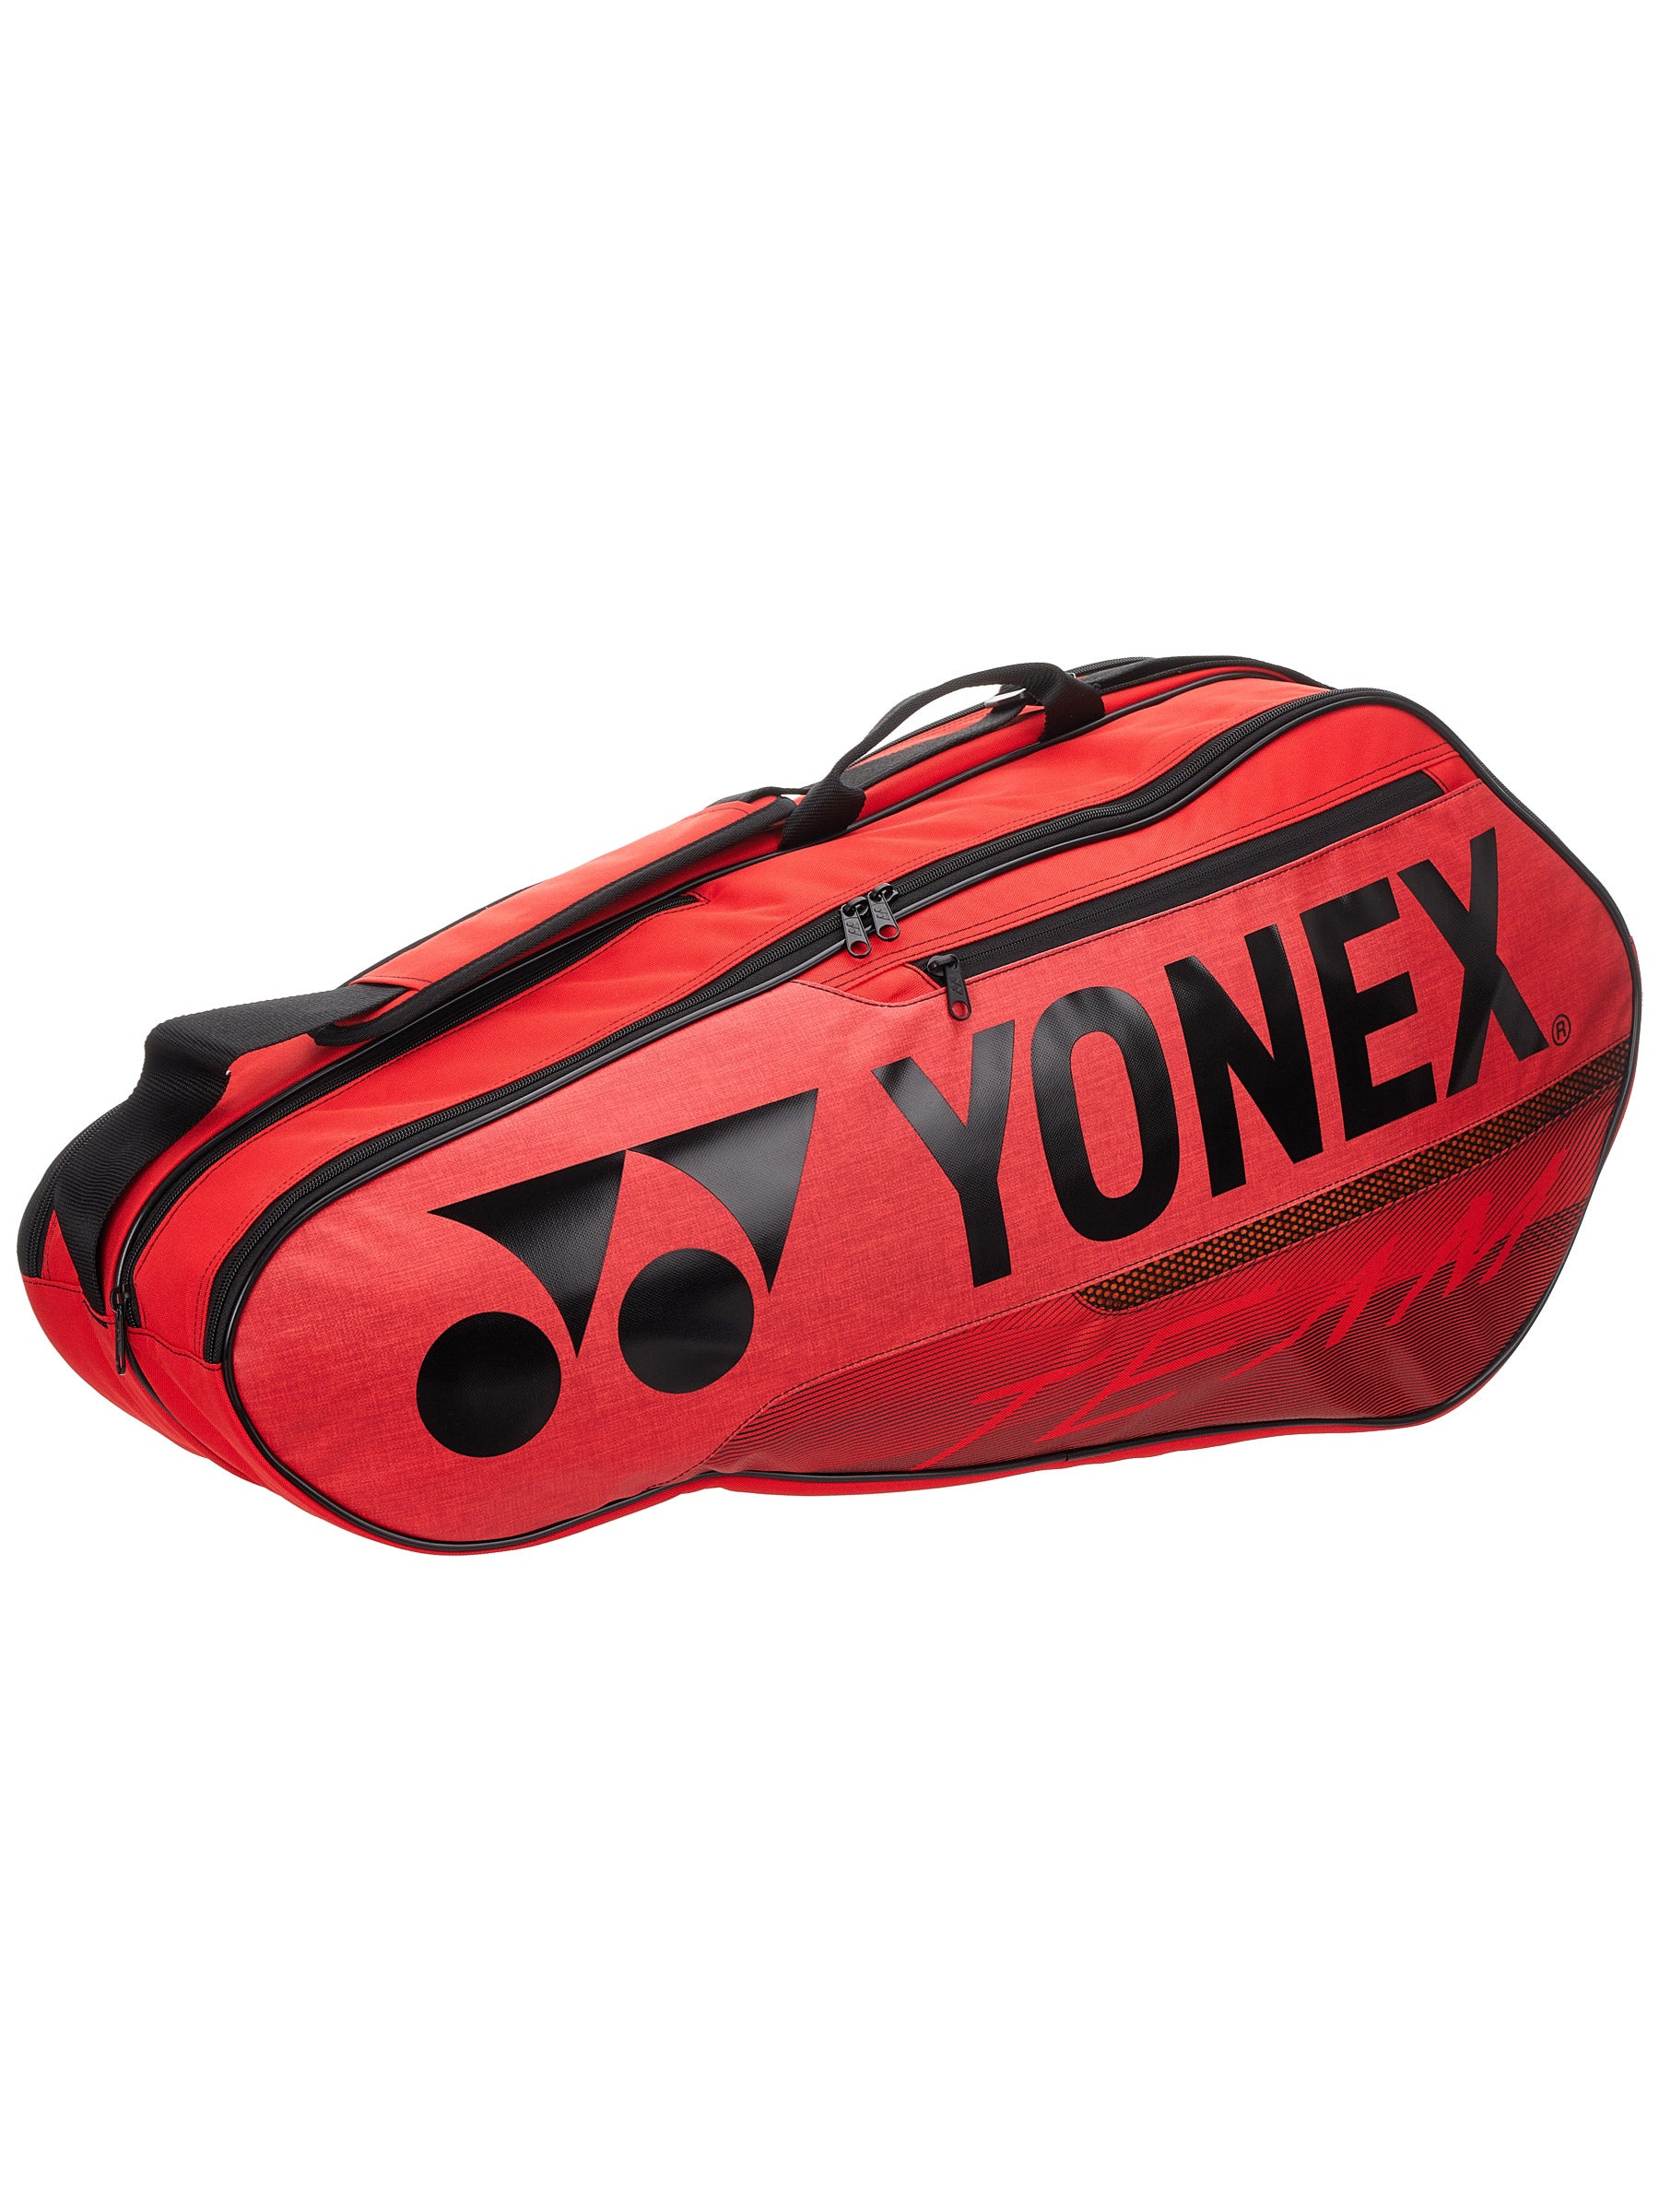 Yonex Team Series BAG4926EX Tennistasche 6R Rot 